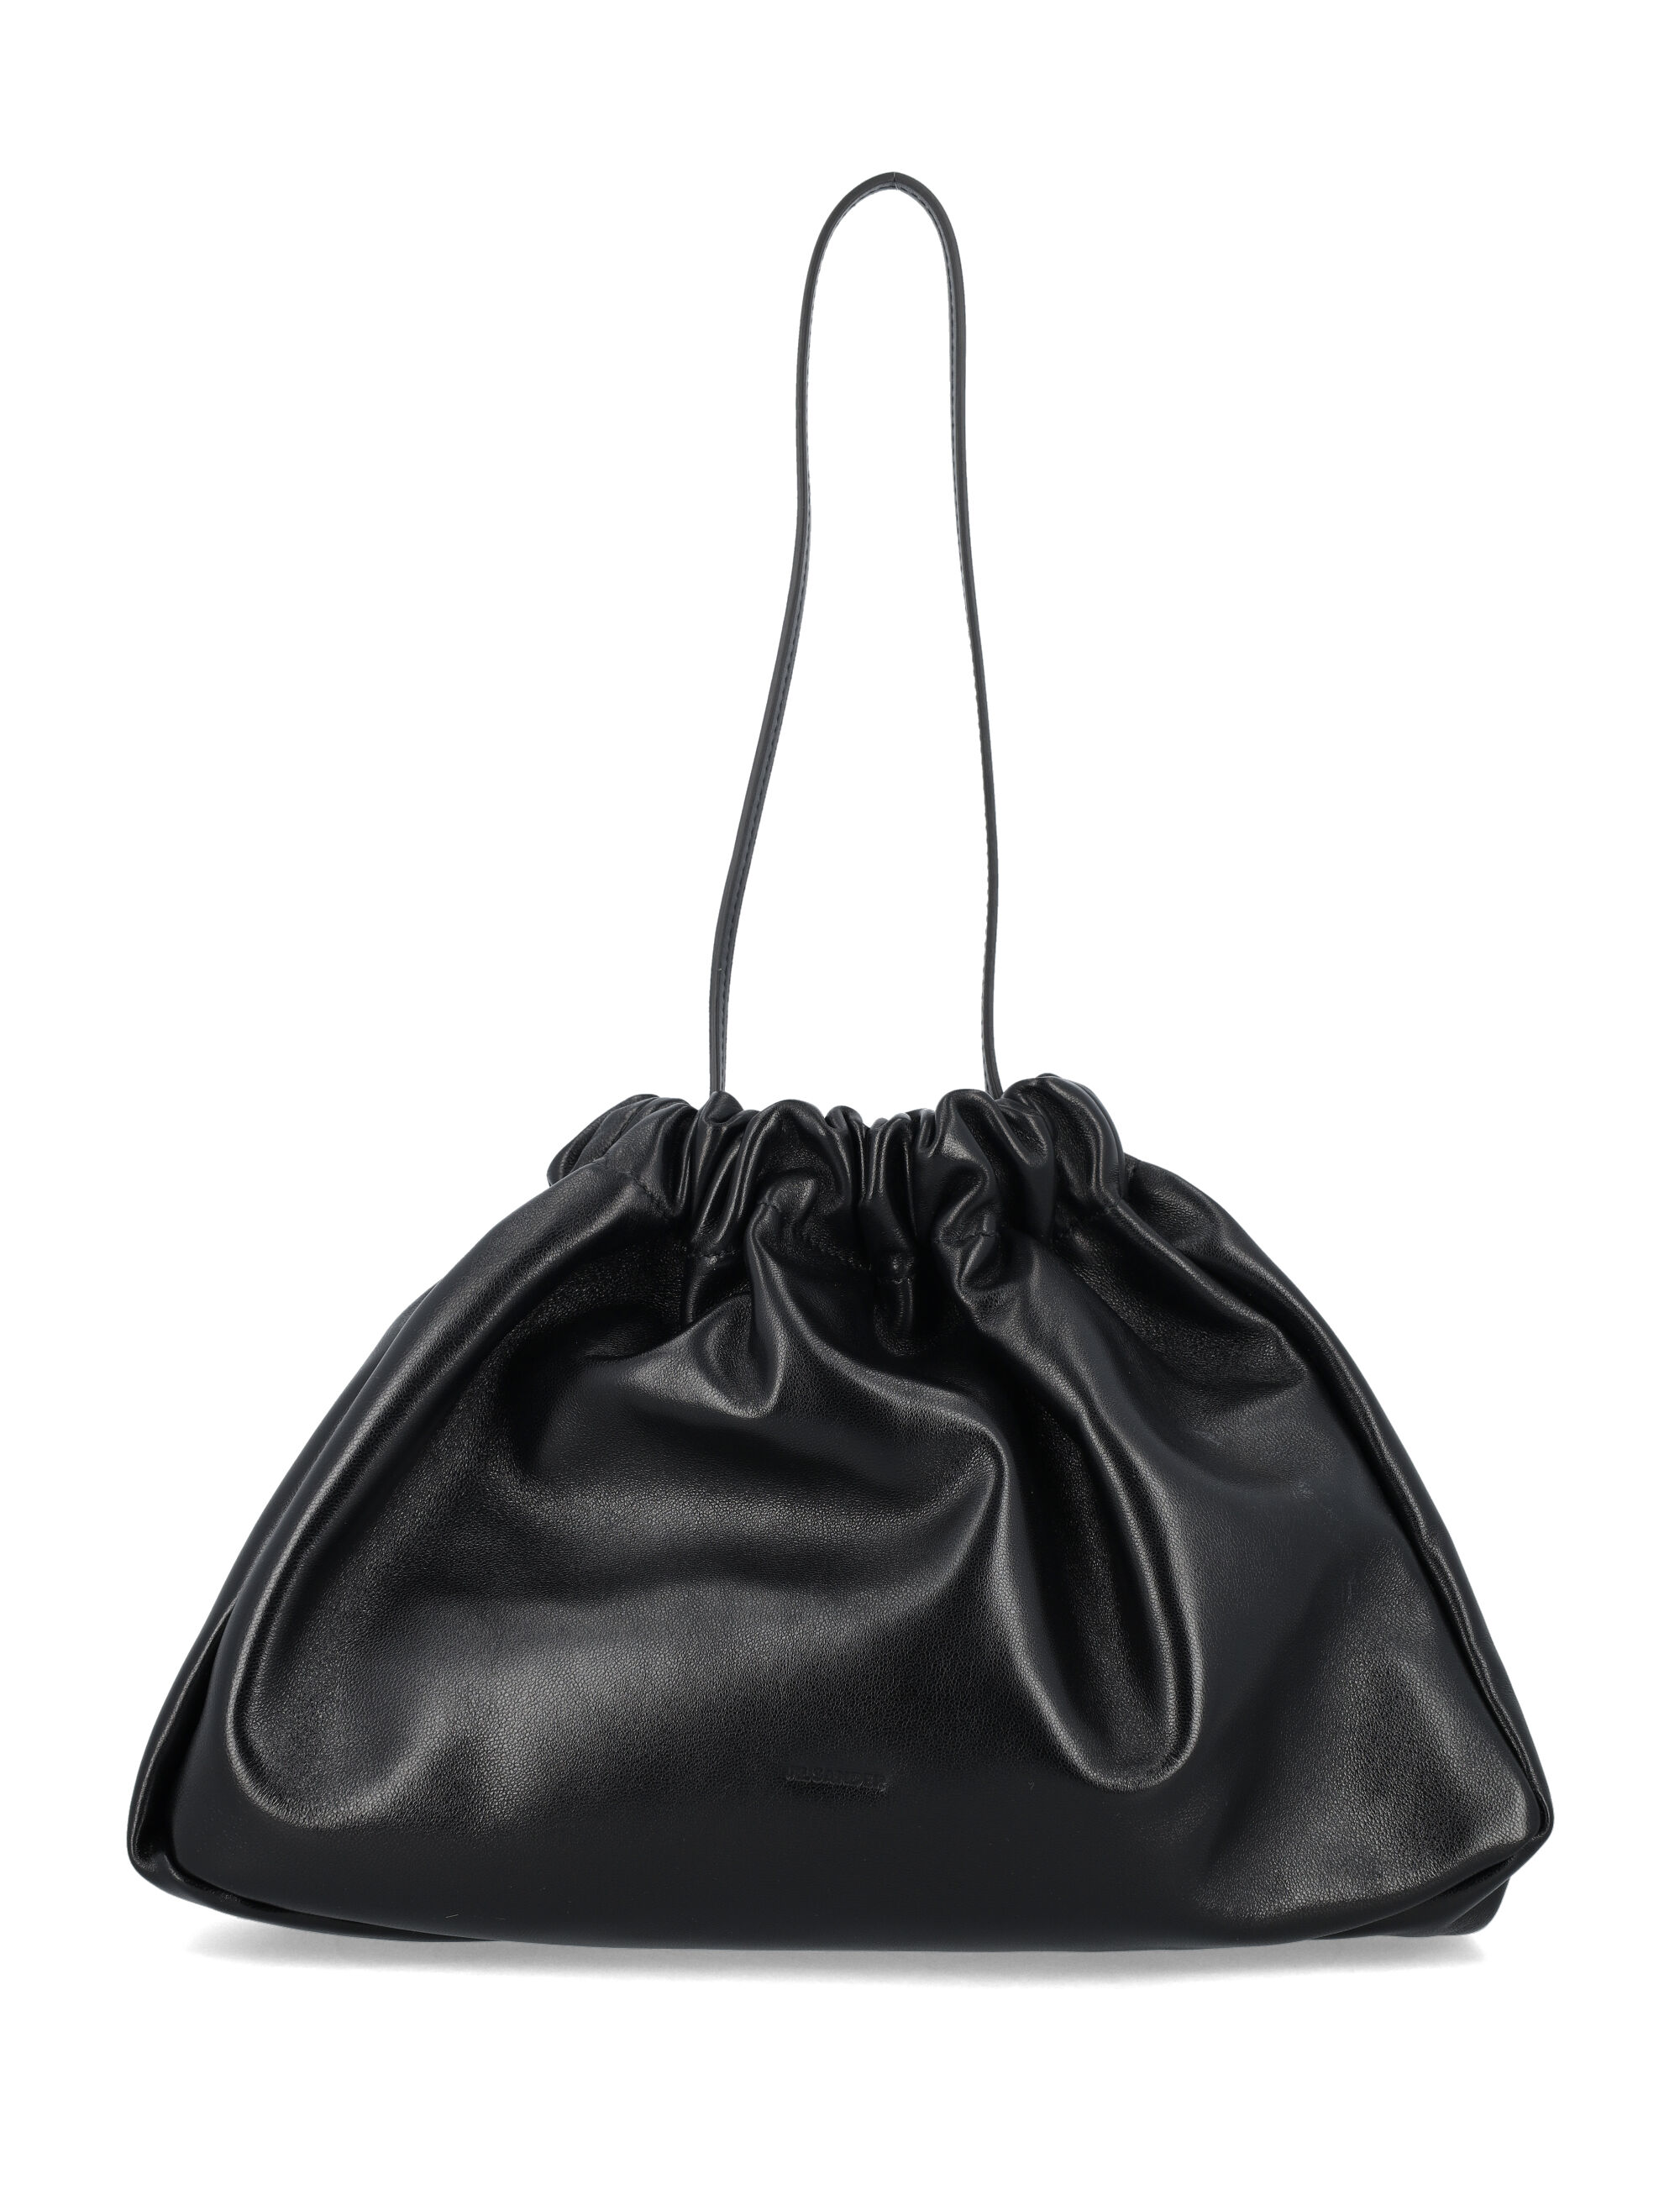 Leather clutch bag, color BLACK | Spazio Pritelli Official Website